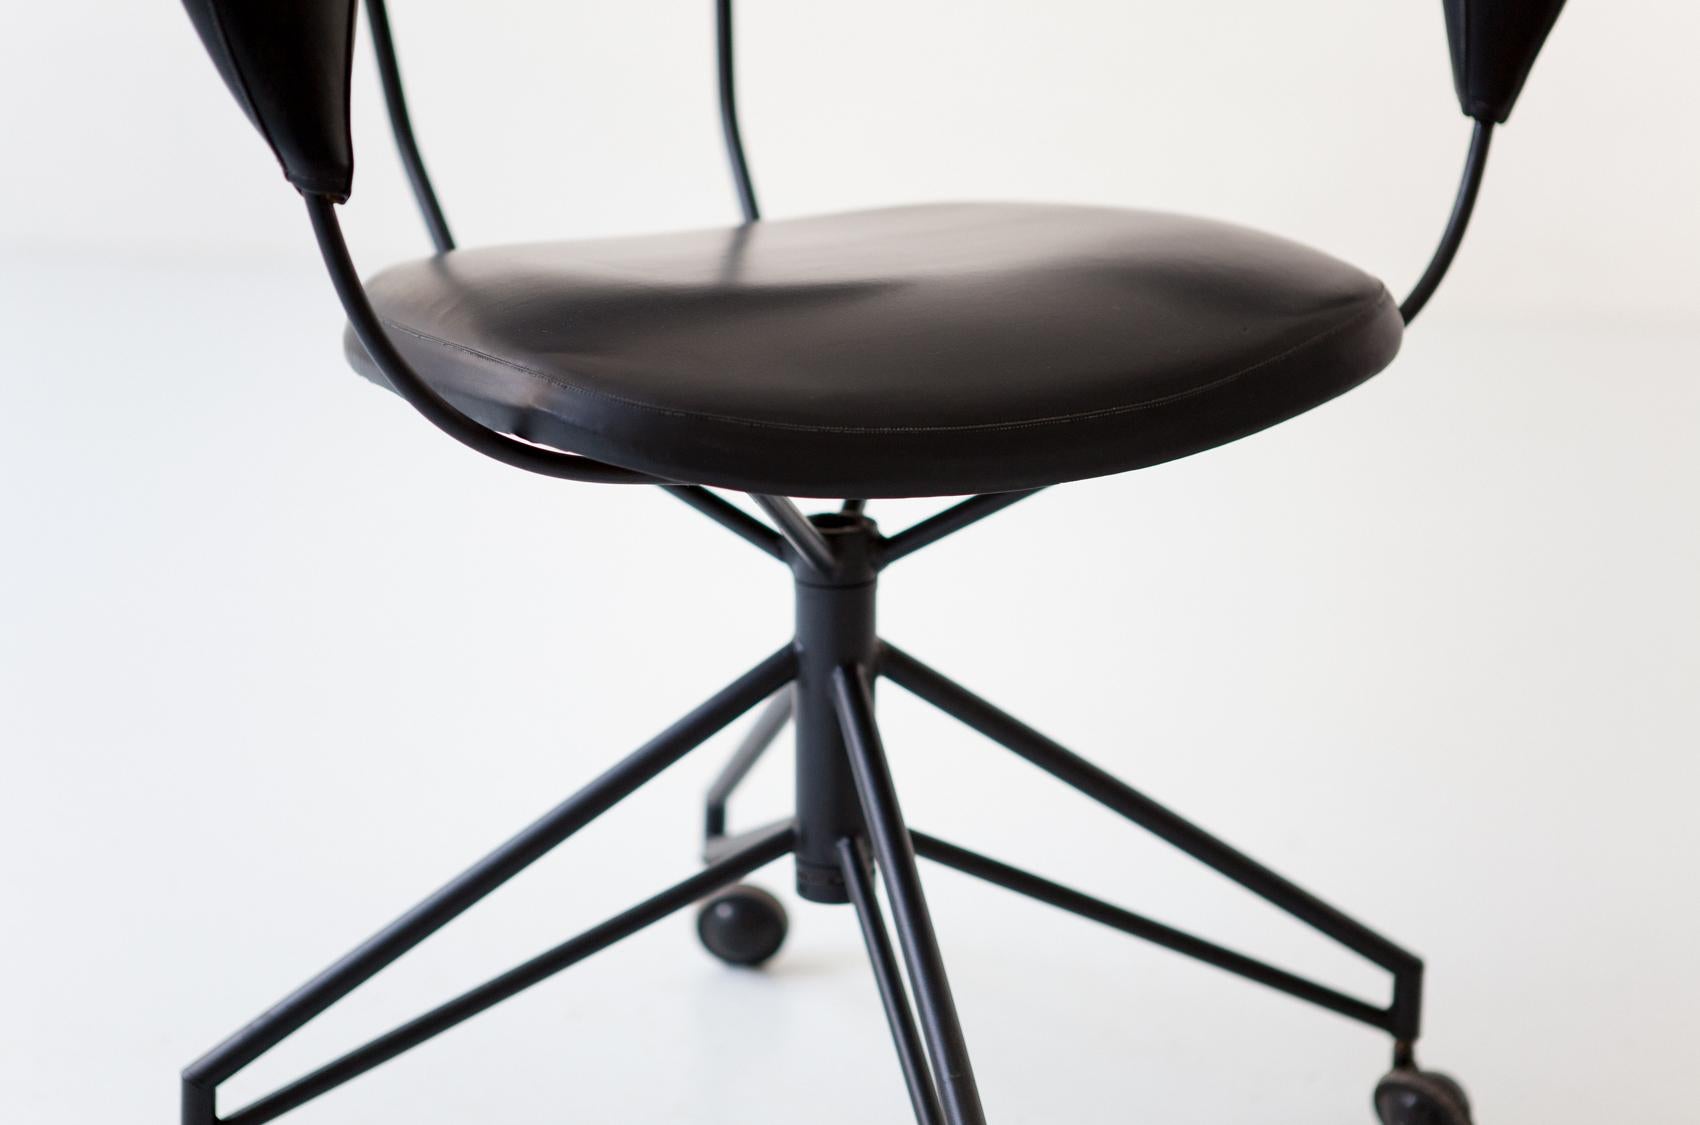 Mid-20th Century Italian Desk Chair in Black Metal and Leatherette by Gastone Rinaldi for Rima